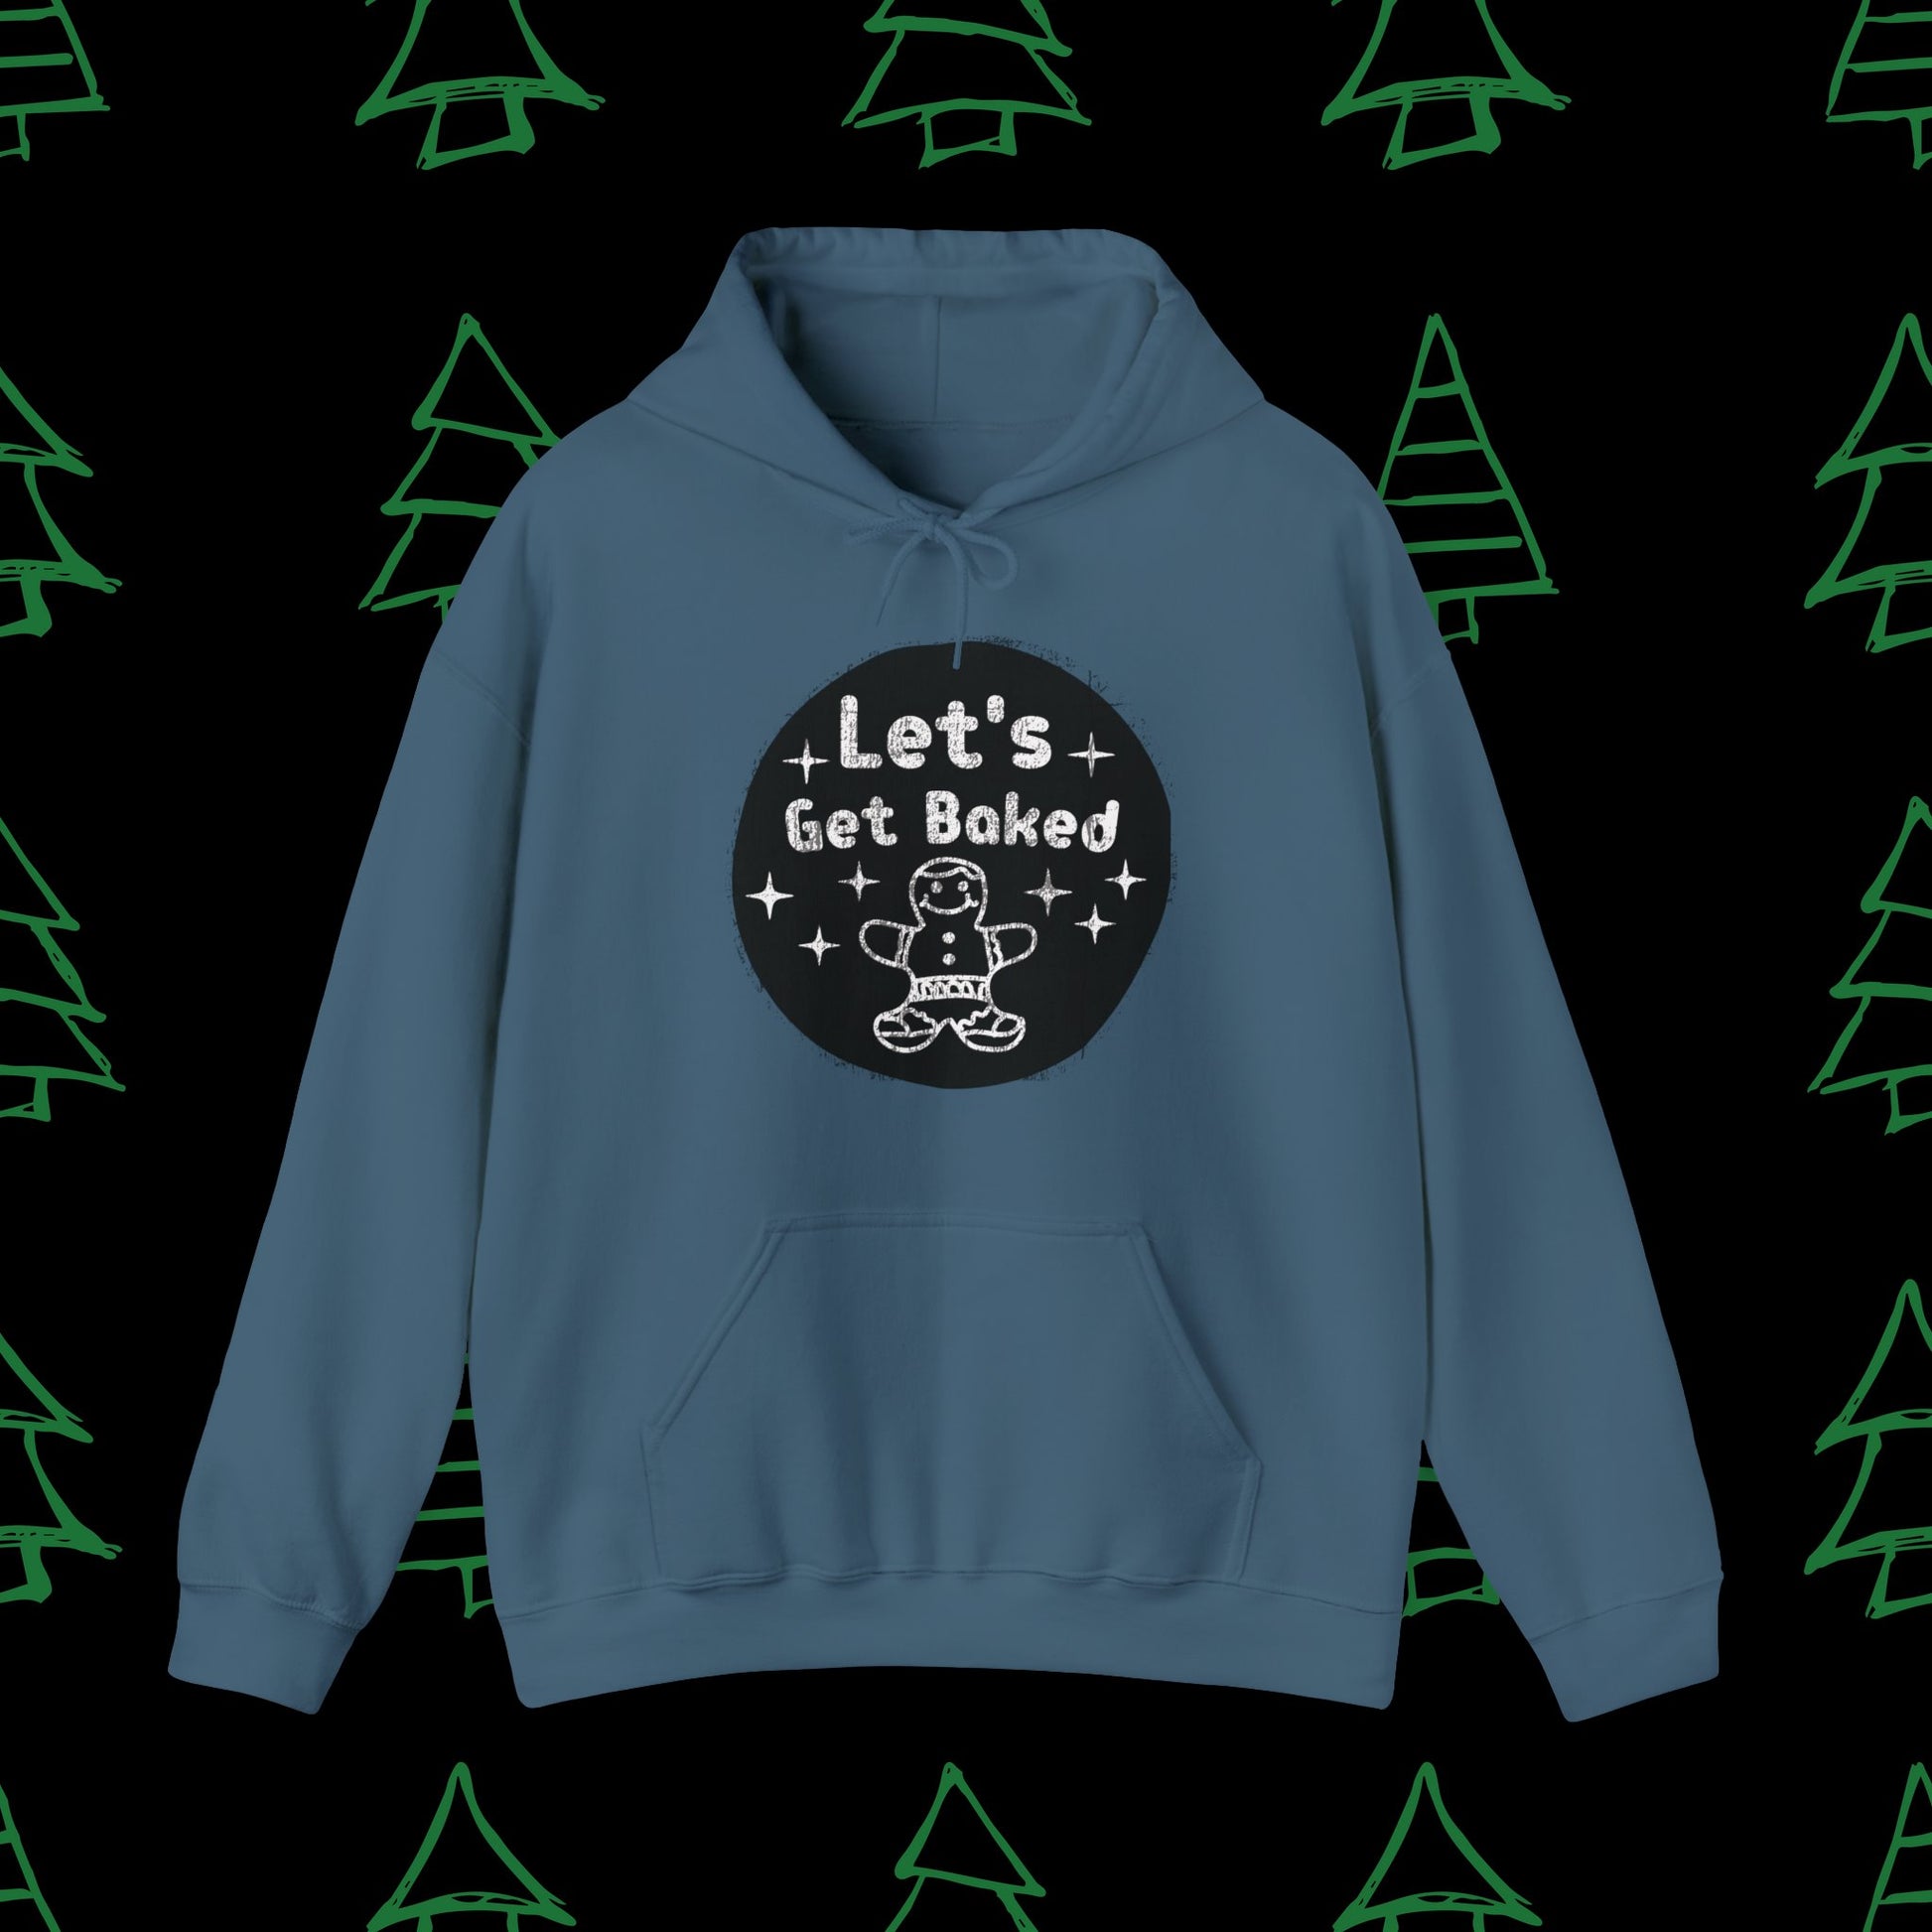 Christmas Hoodie - Let's Get Baked - Mens Christmas Shirts - Adult Christmas Hooded Sweatshirt Hooded Sweatshirt Graphic Avenue Indigo Blue Adult Small 